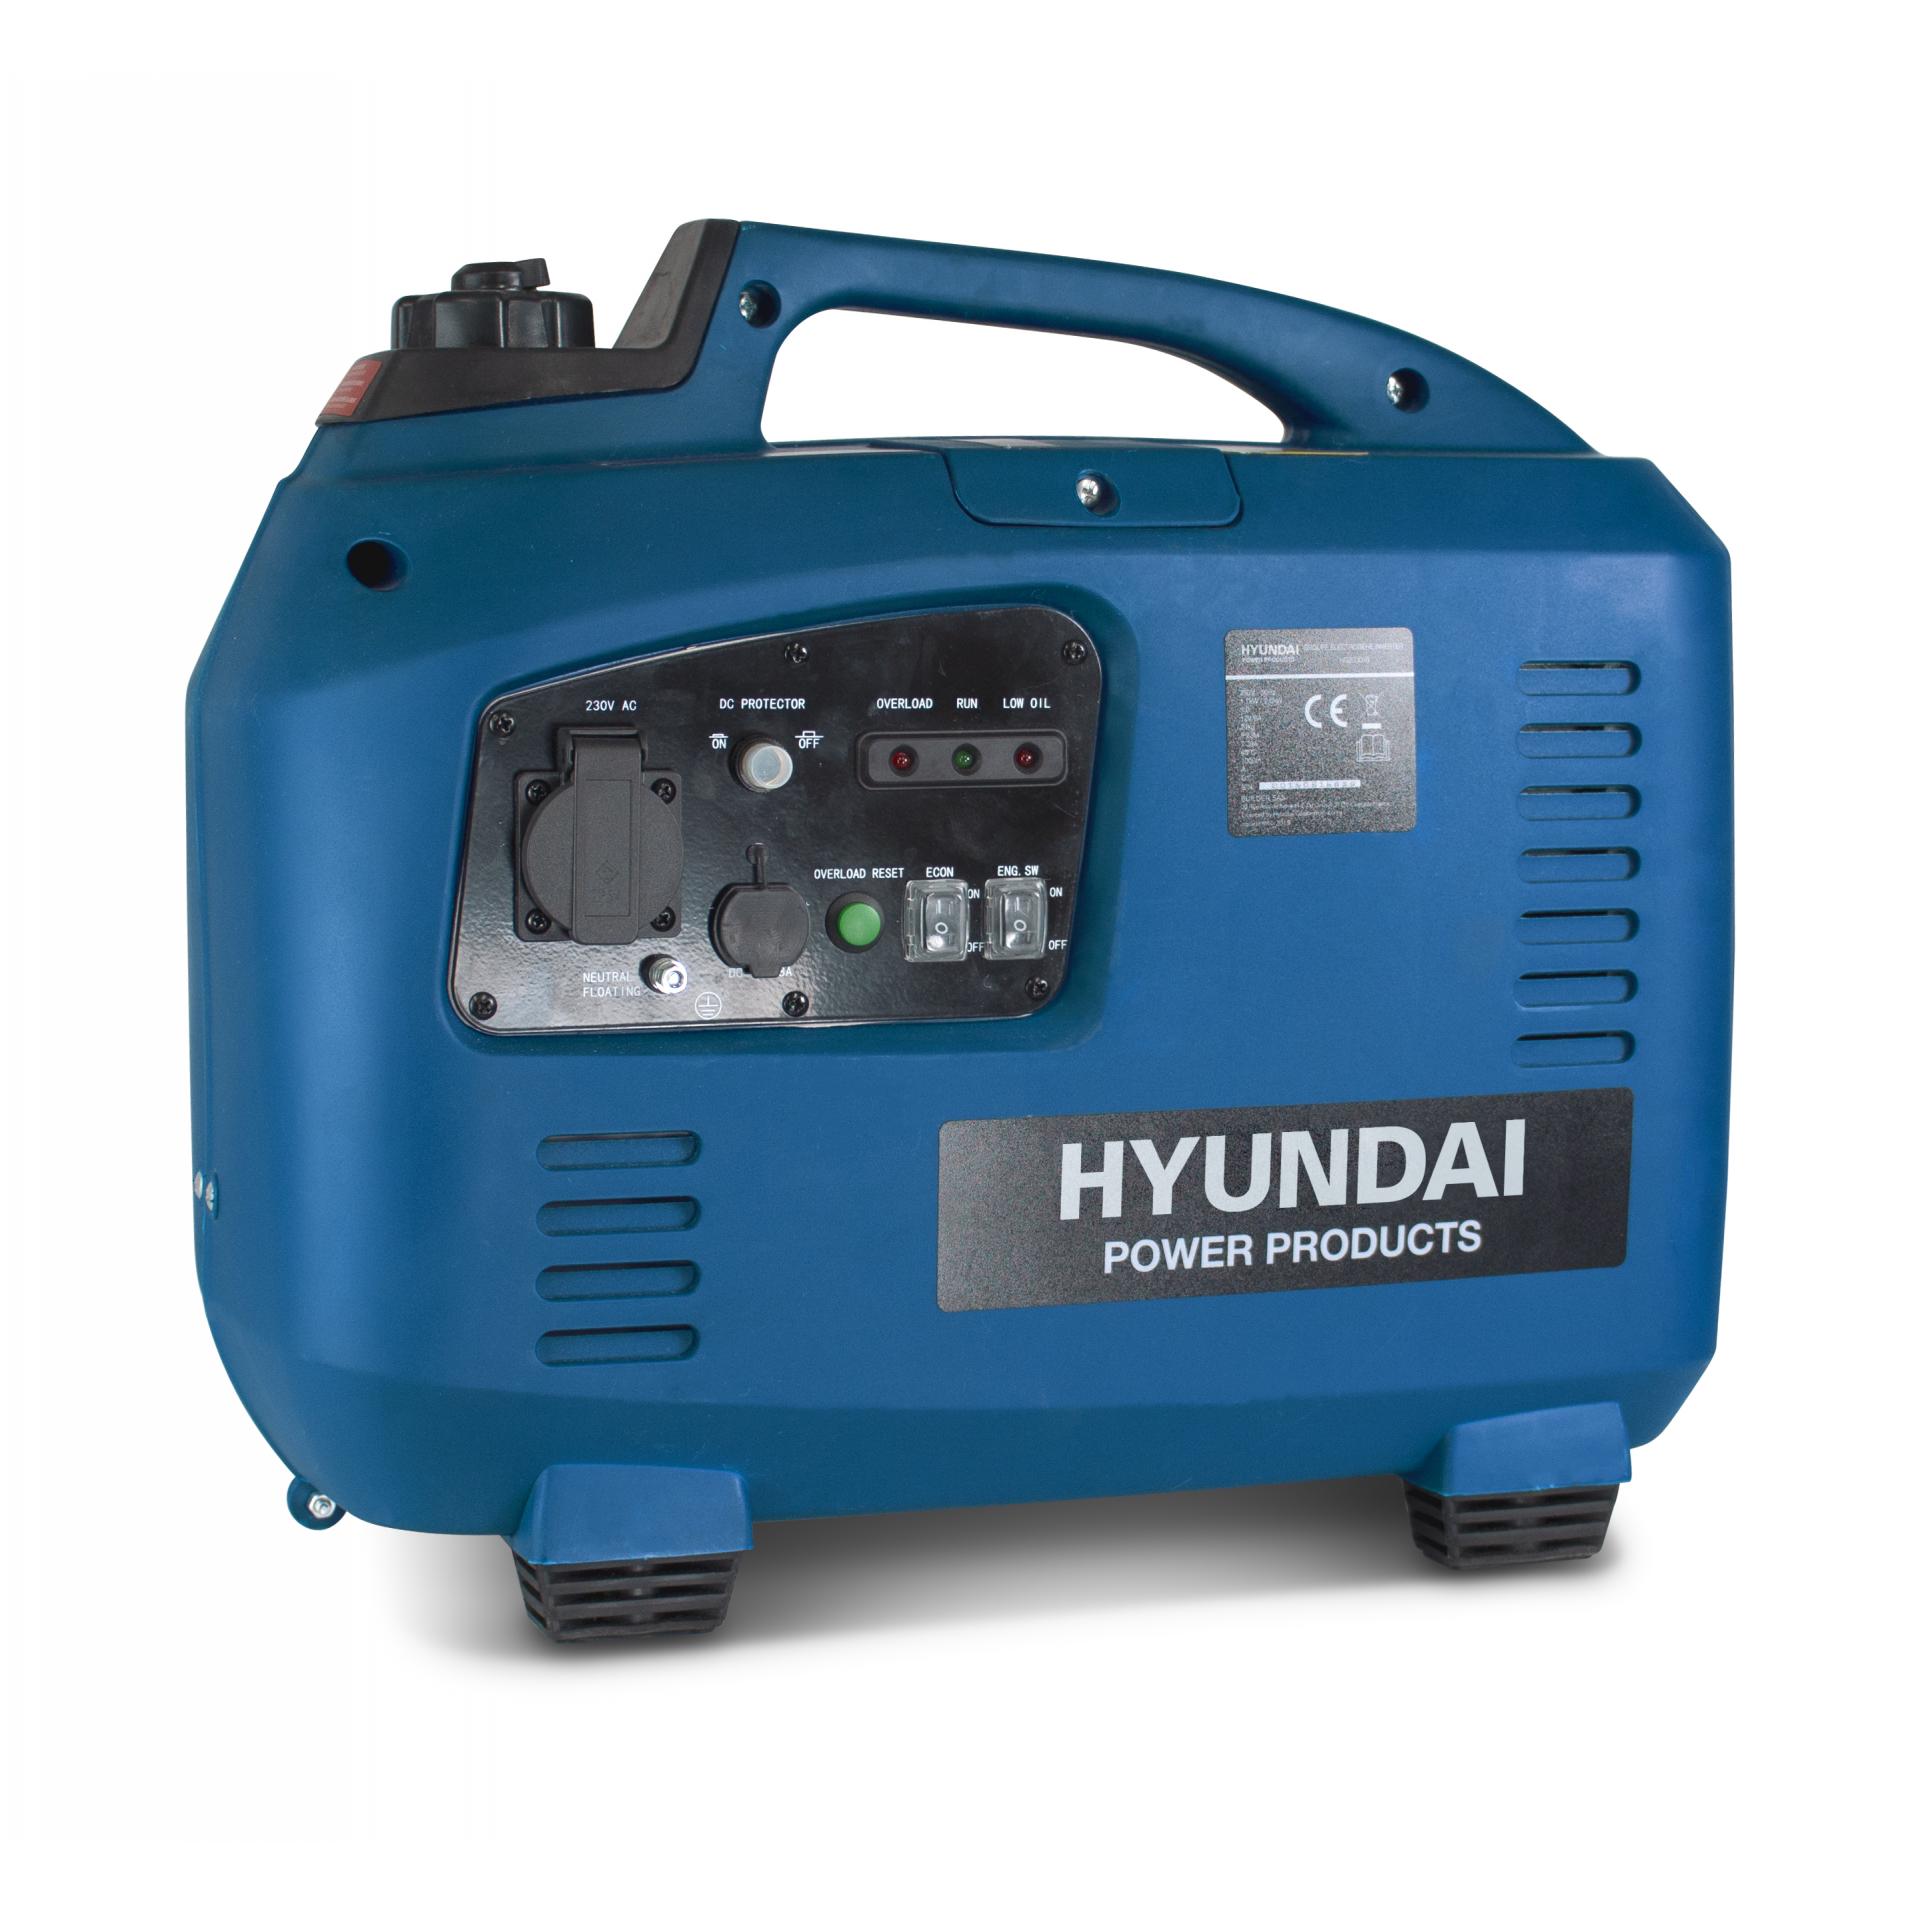 HYUNDAI Groupe électrogène Inverter HG2000I-A - 1600W pas cher 